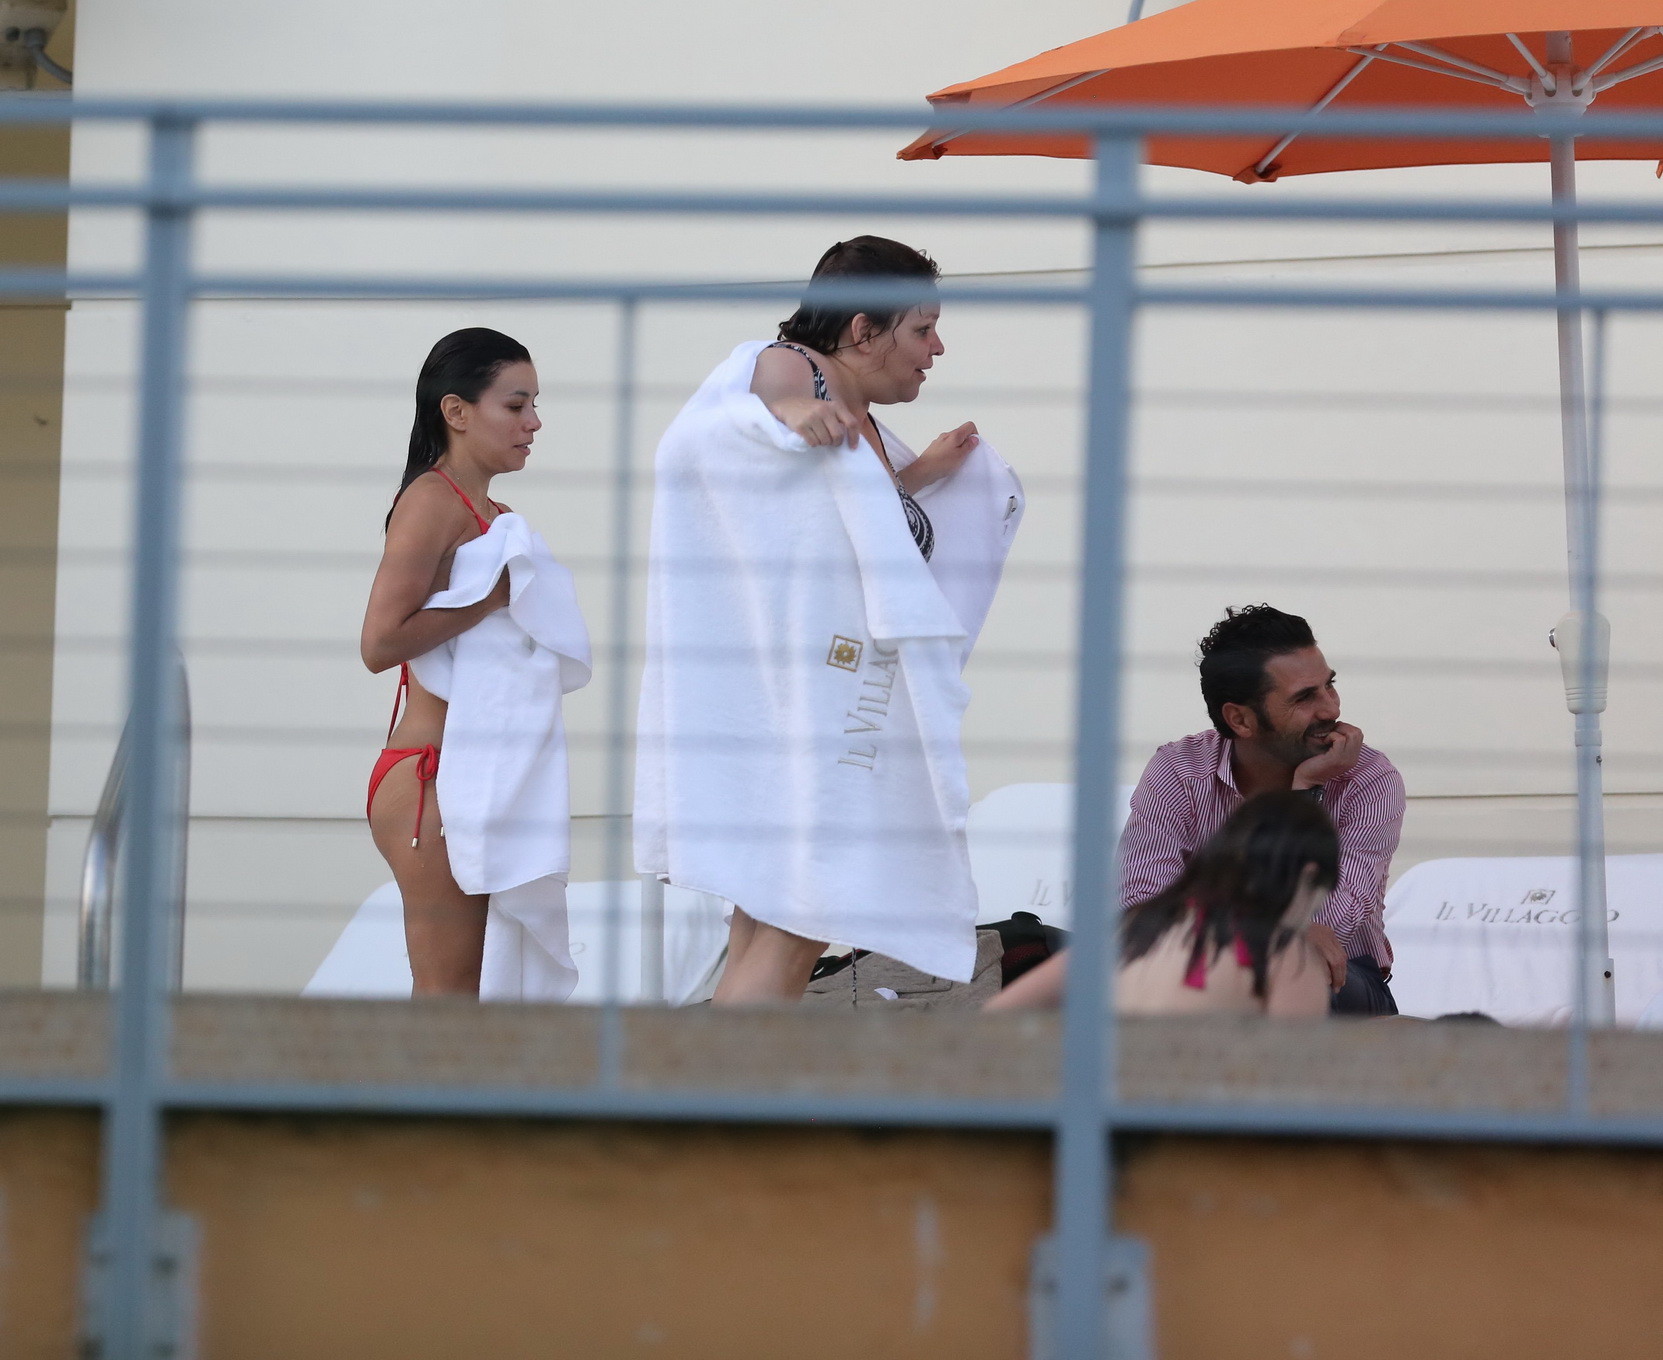 Eva Longoria shows off her round ass in a skimpy red bikini at the pool in Miami #75179951